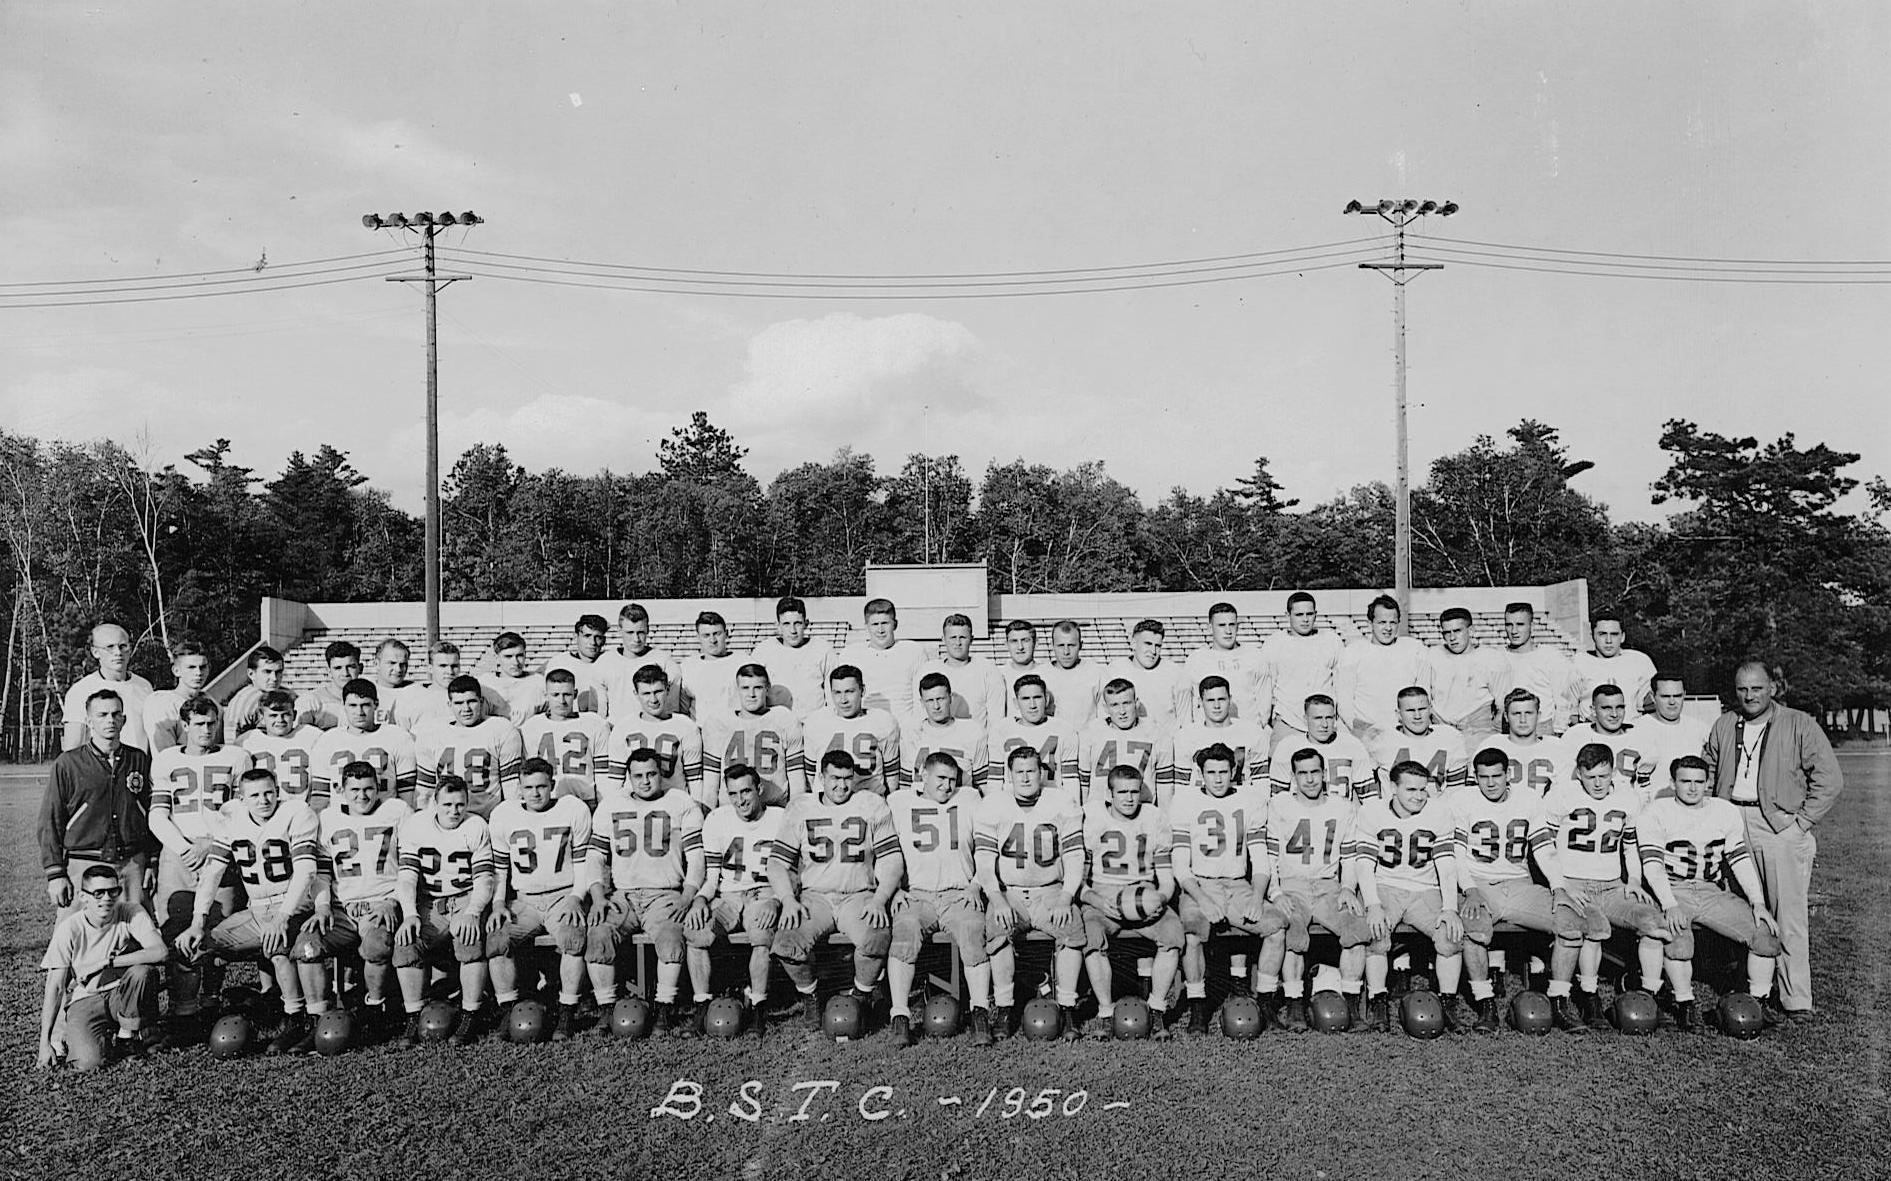 BSTC football team, 1950